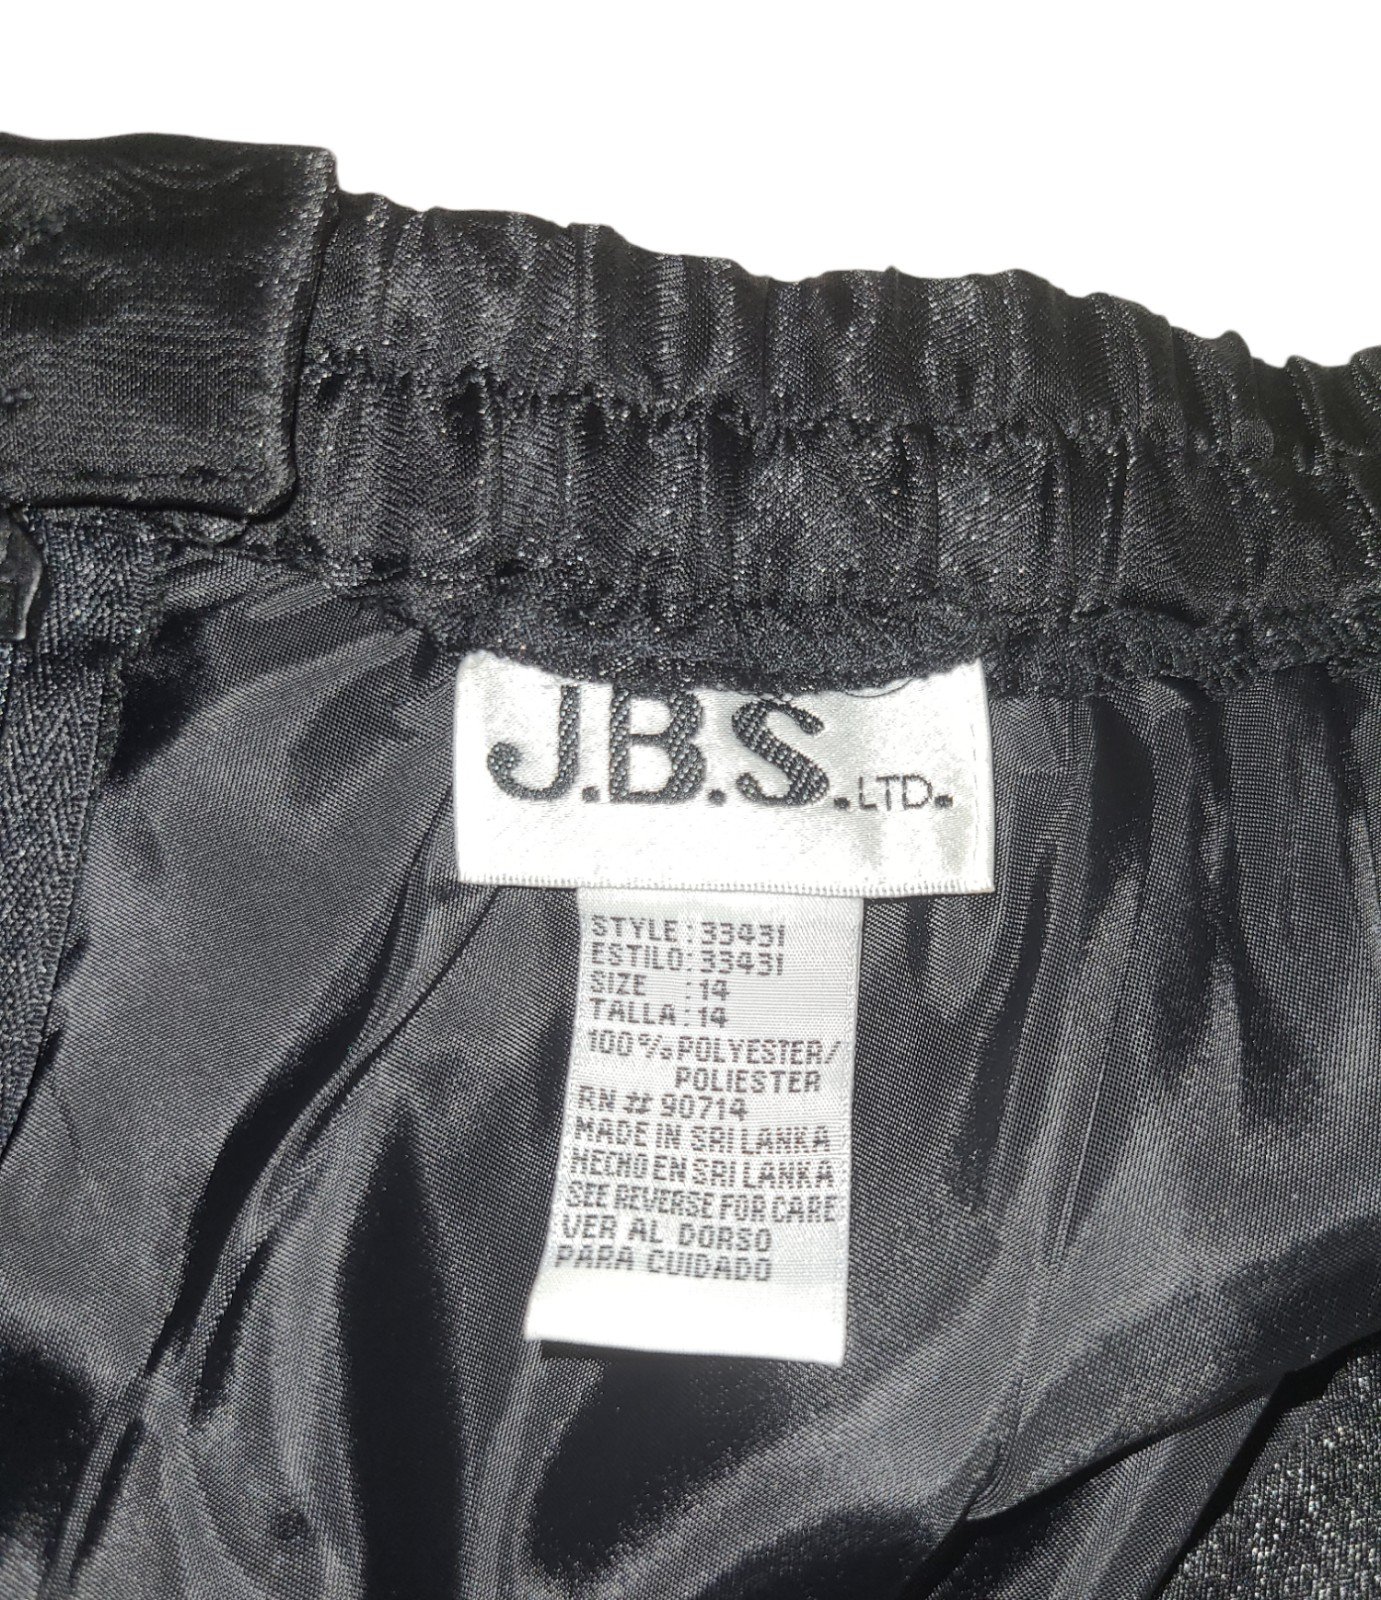 Exclusive VINTAGE J.B.S. LTD. SKIRT WOMENS 14 BLACK SHEER LINED MAXI SKIRT GRUNGE GOTH mUkigogKd hot sale